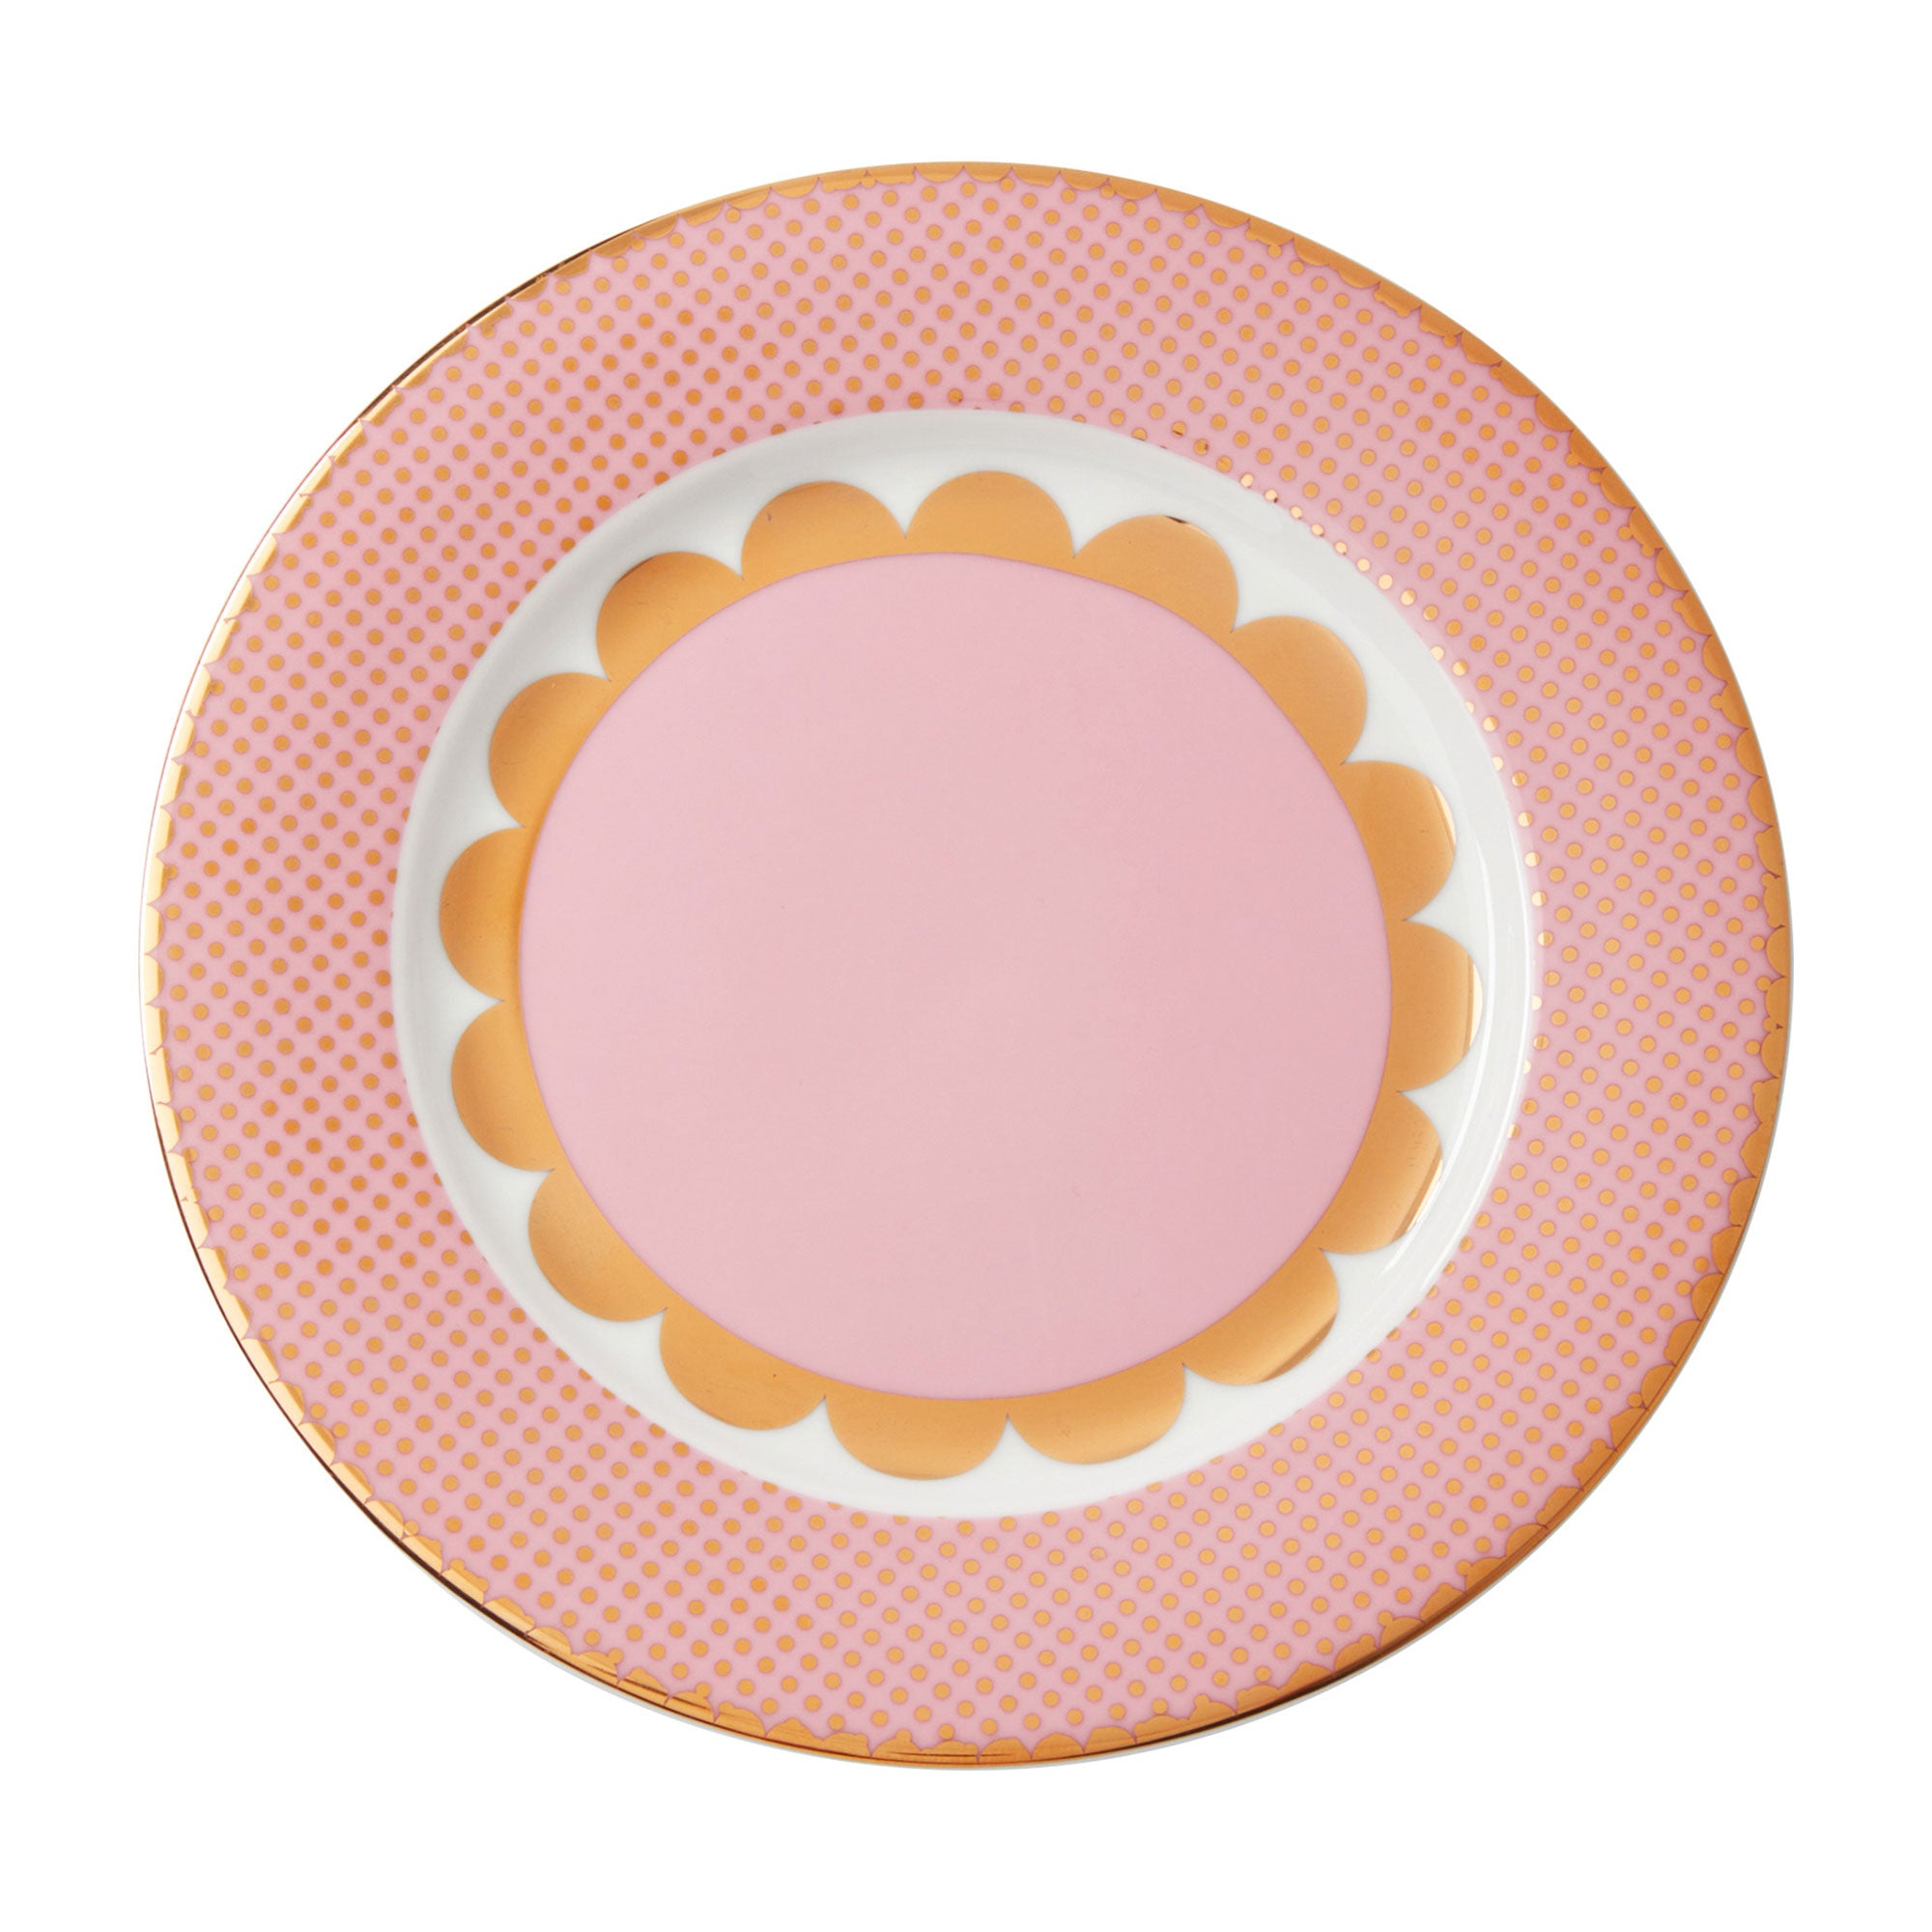 Maxwell & Williams - Teas's & C's Regency Pink Rim Plate